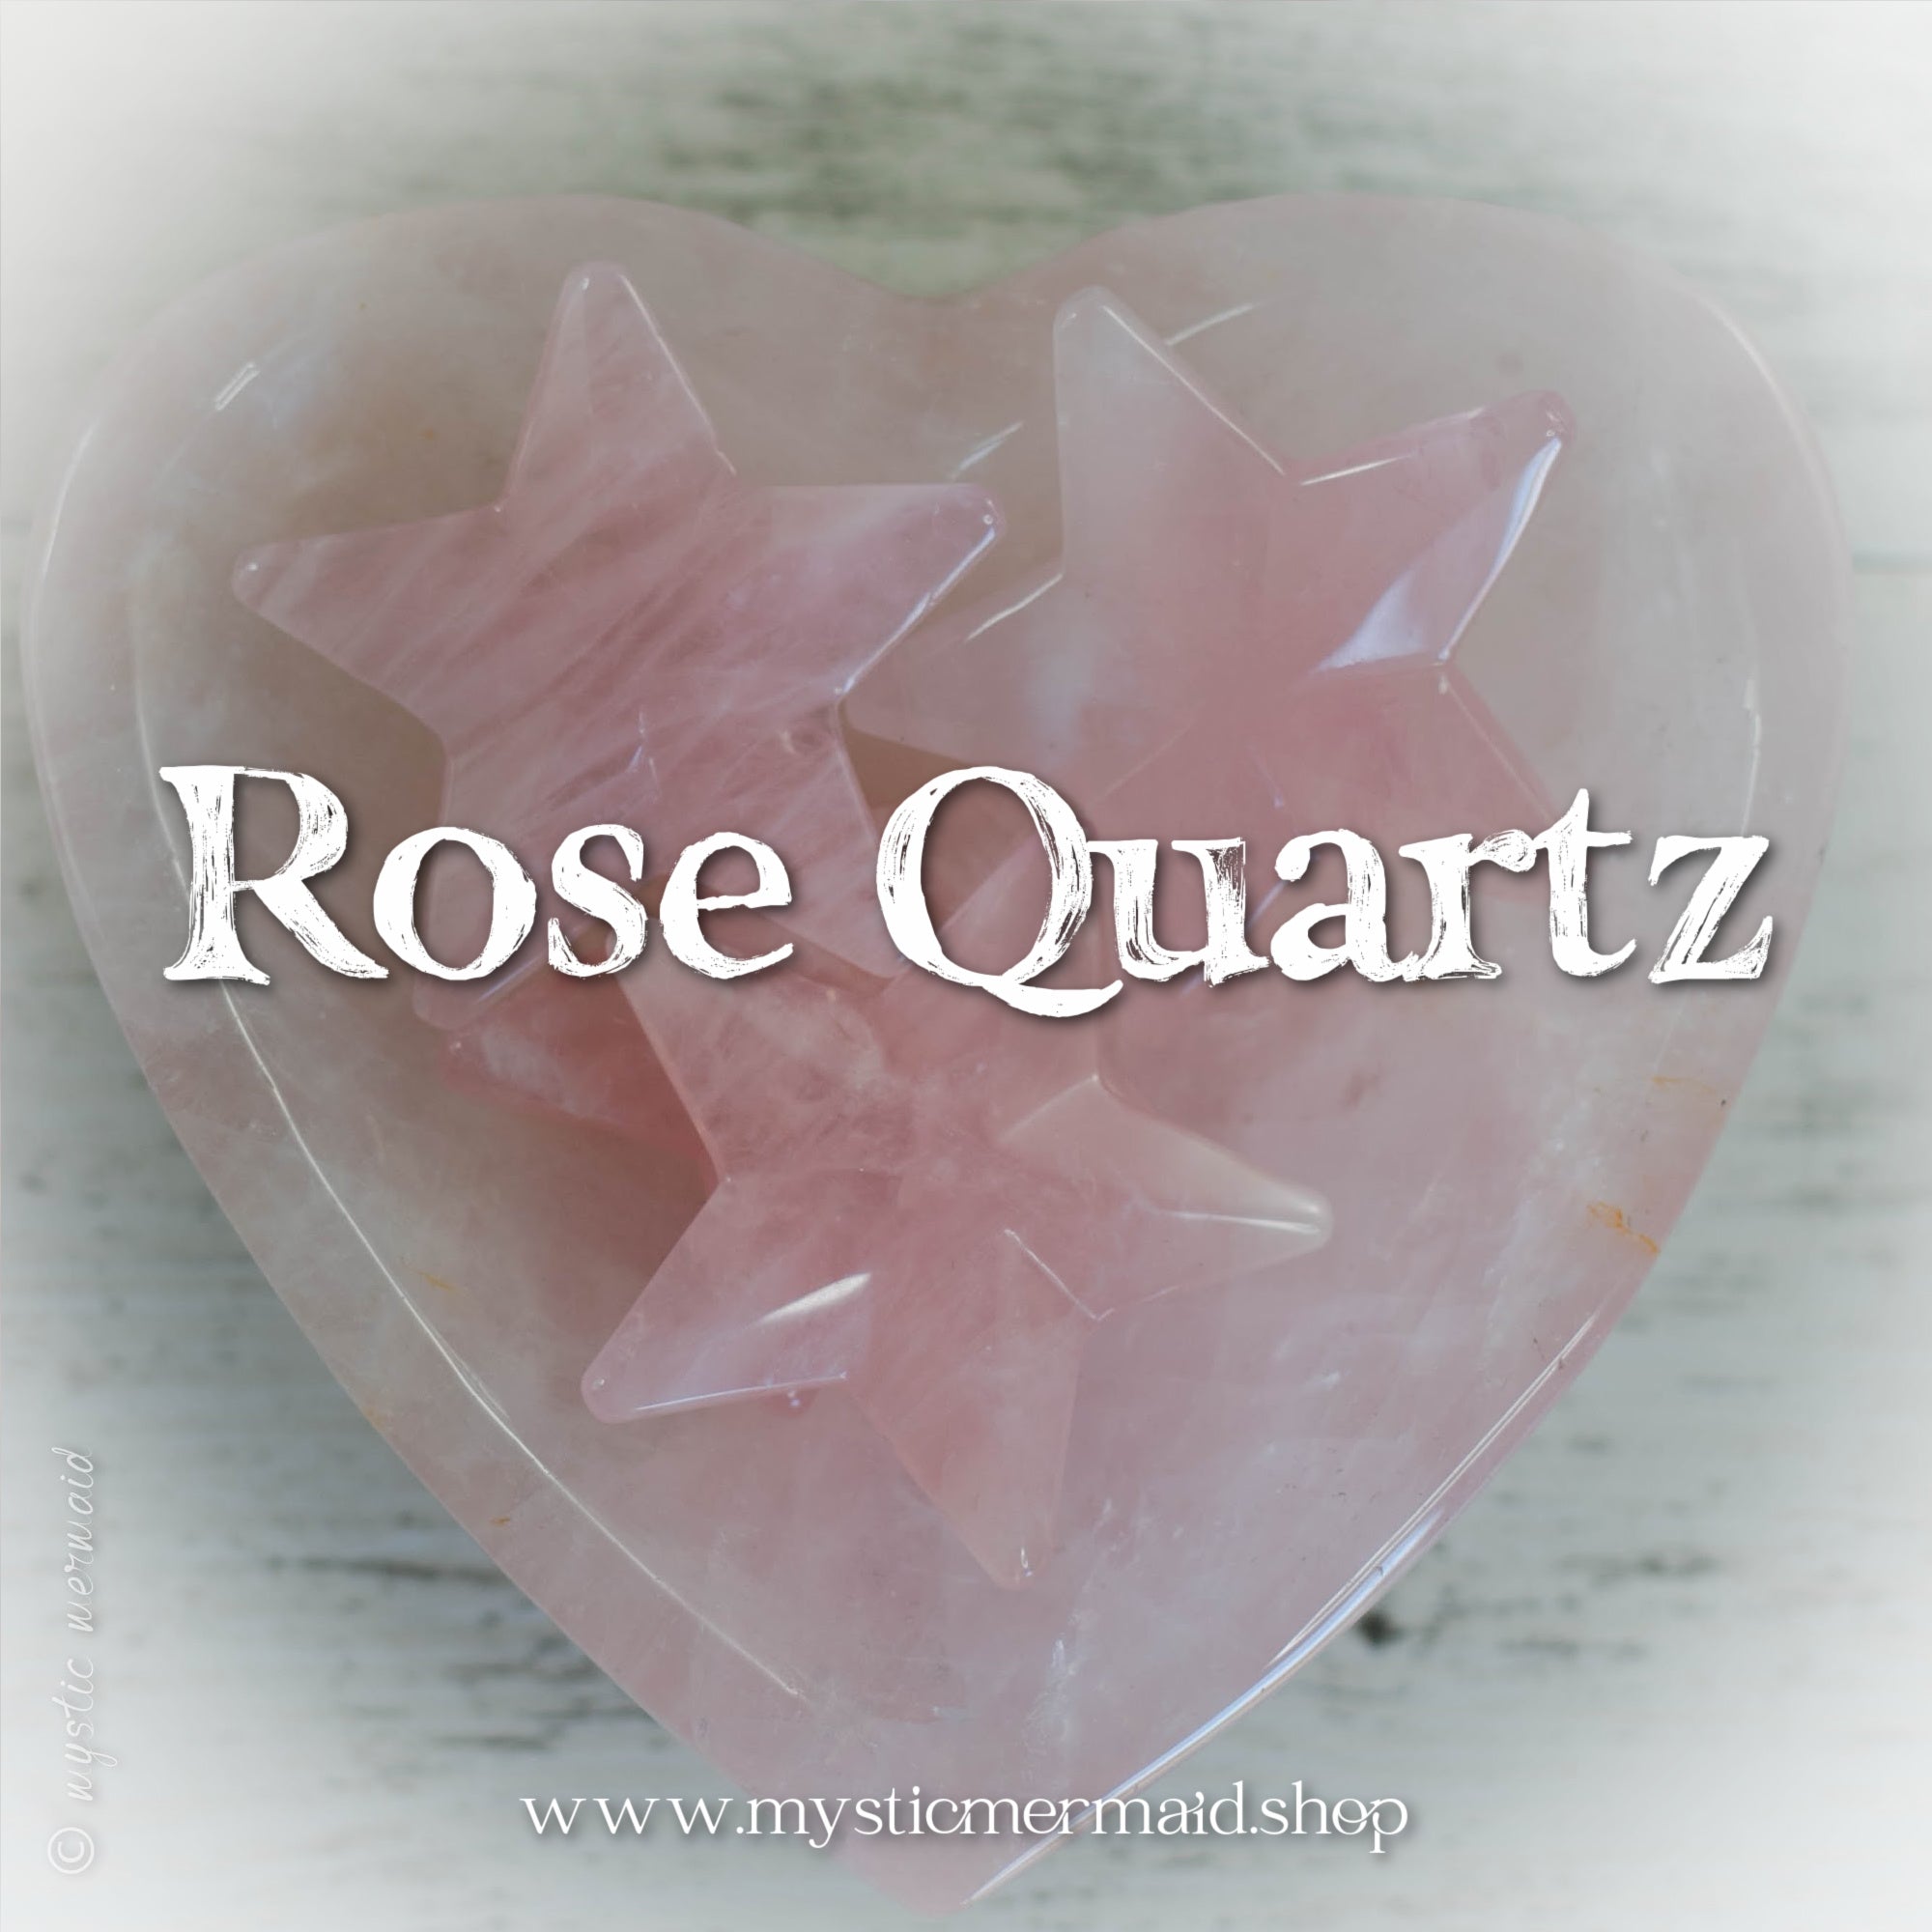 Rose Quartz Crystal Metaphysical Properties